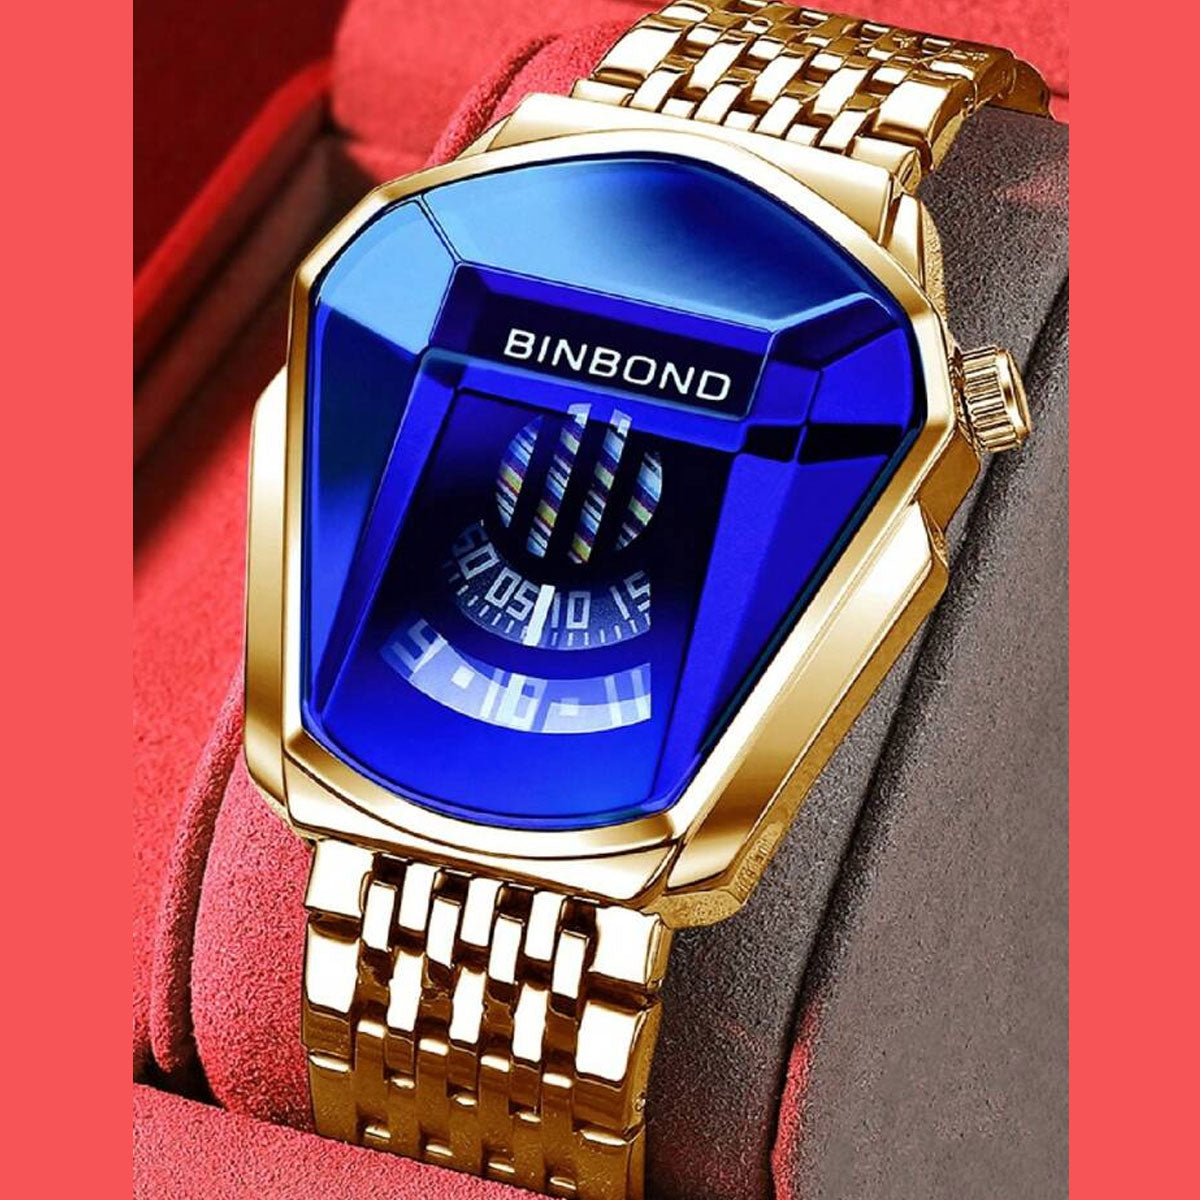 Reloj de Lujo Para Caballero Binbond Fralugio De Metal Dorado